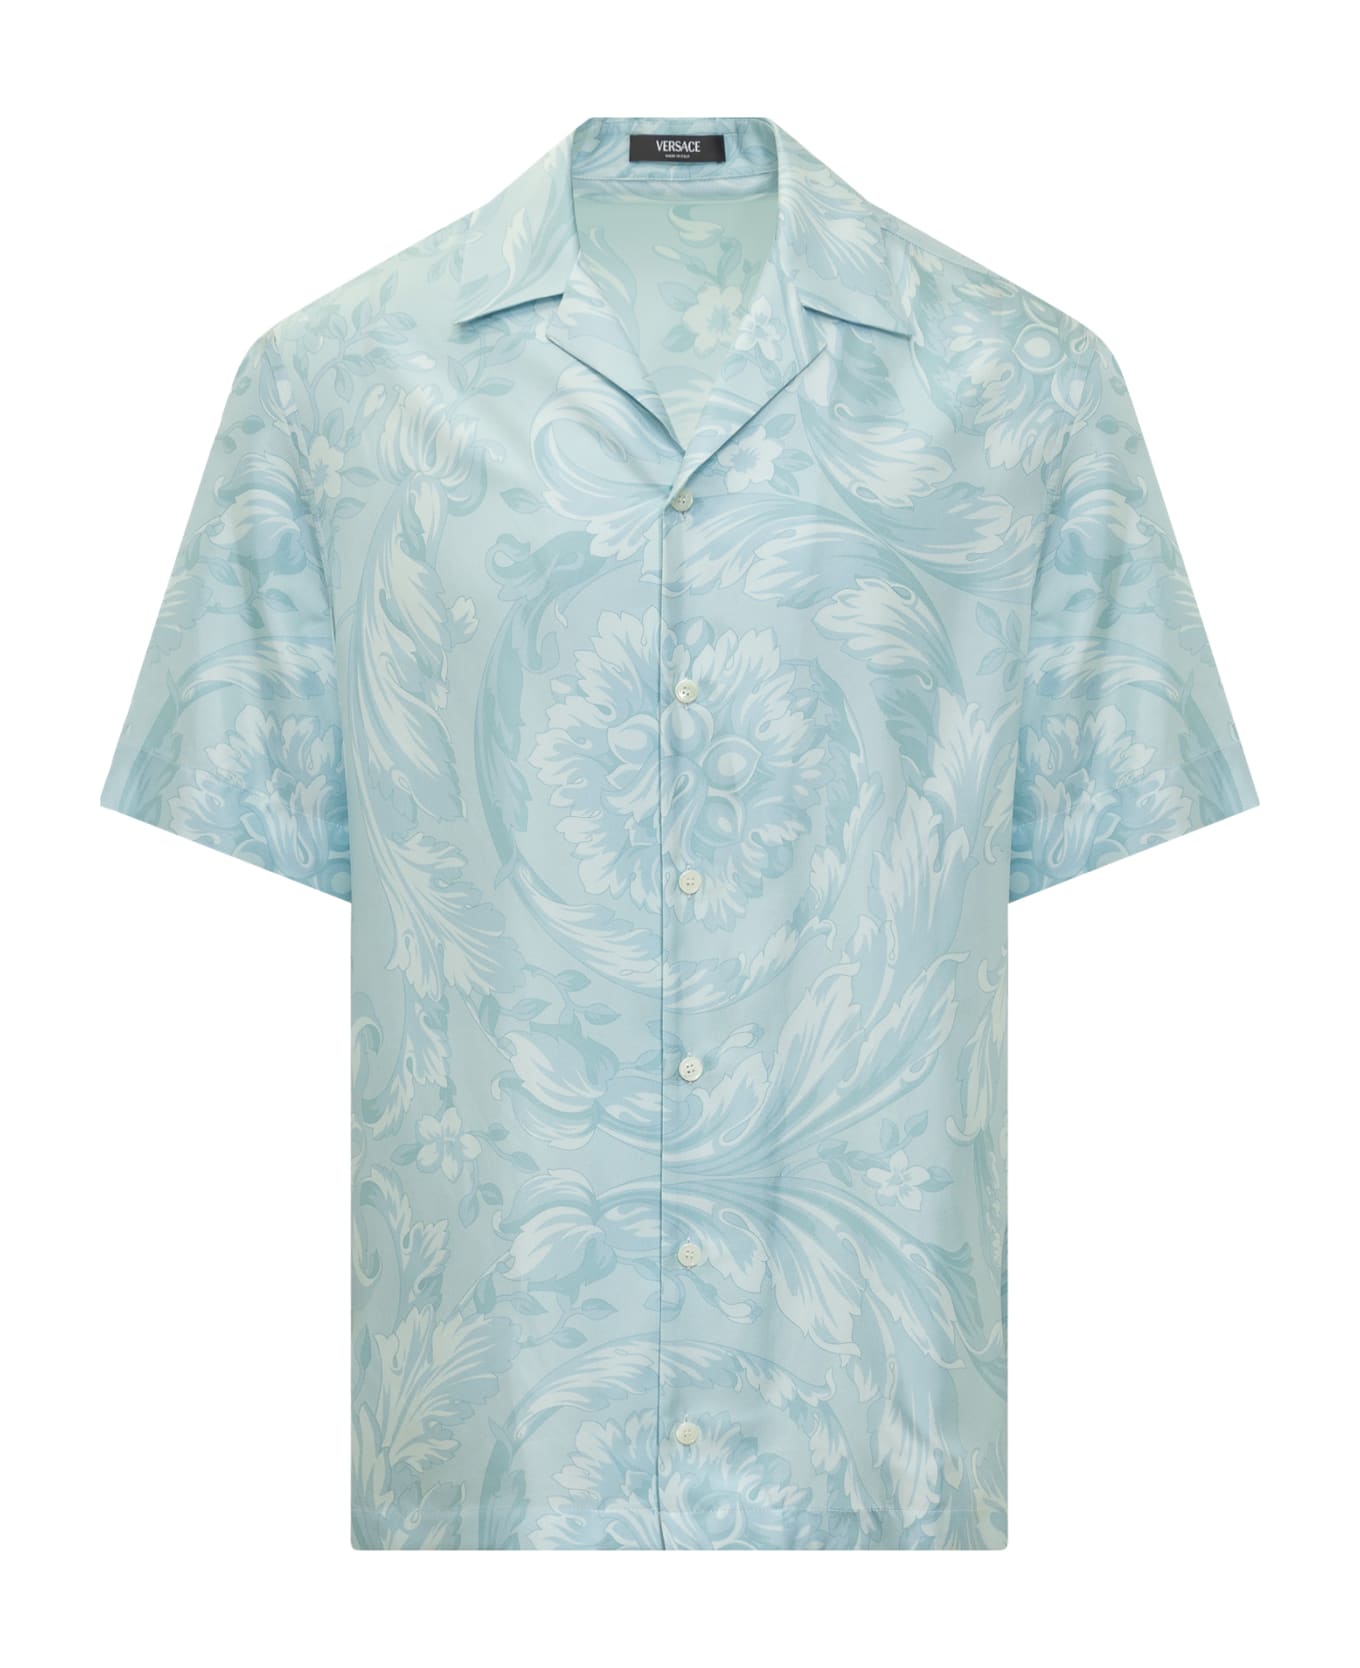 Versace Informal Shirt - Pale Blue